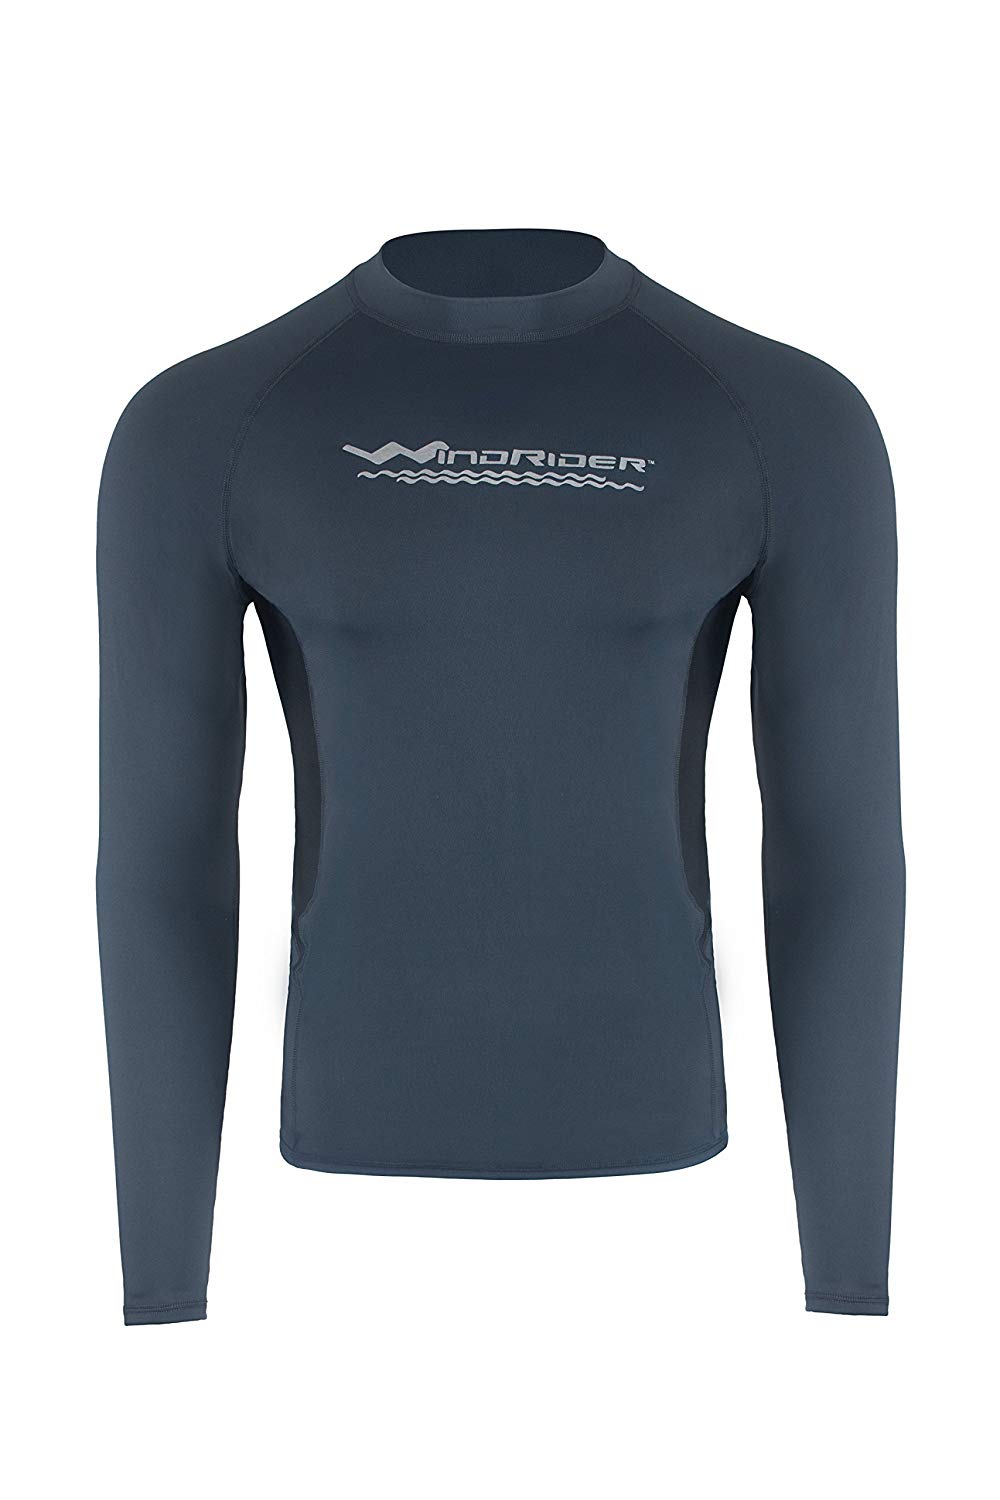 WindRider Men's Rash Guard Swim Shirt – Long Sleeve UPF 50+ Performance Fit  